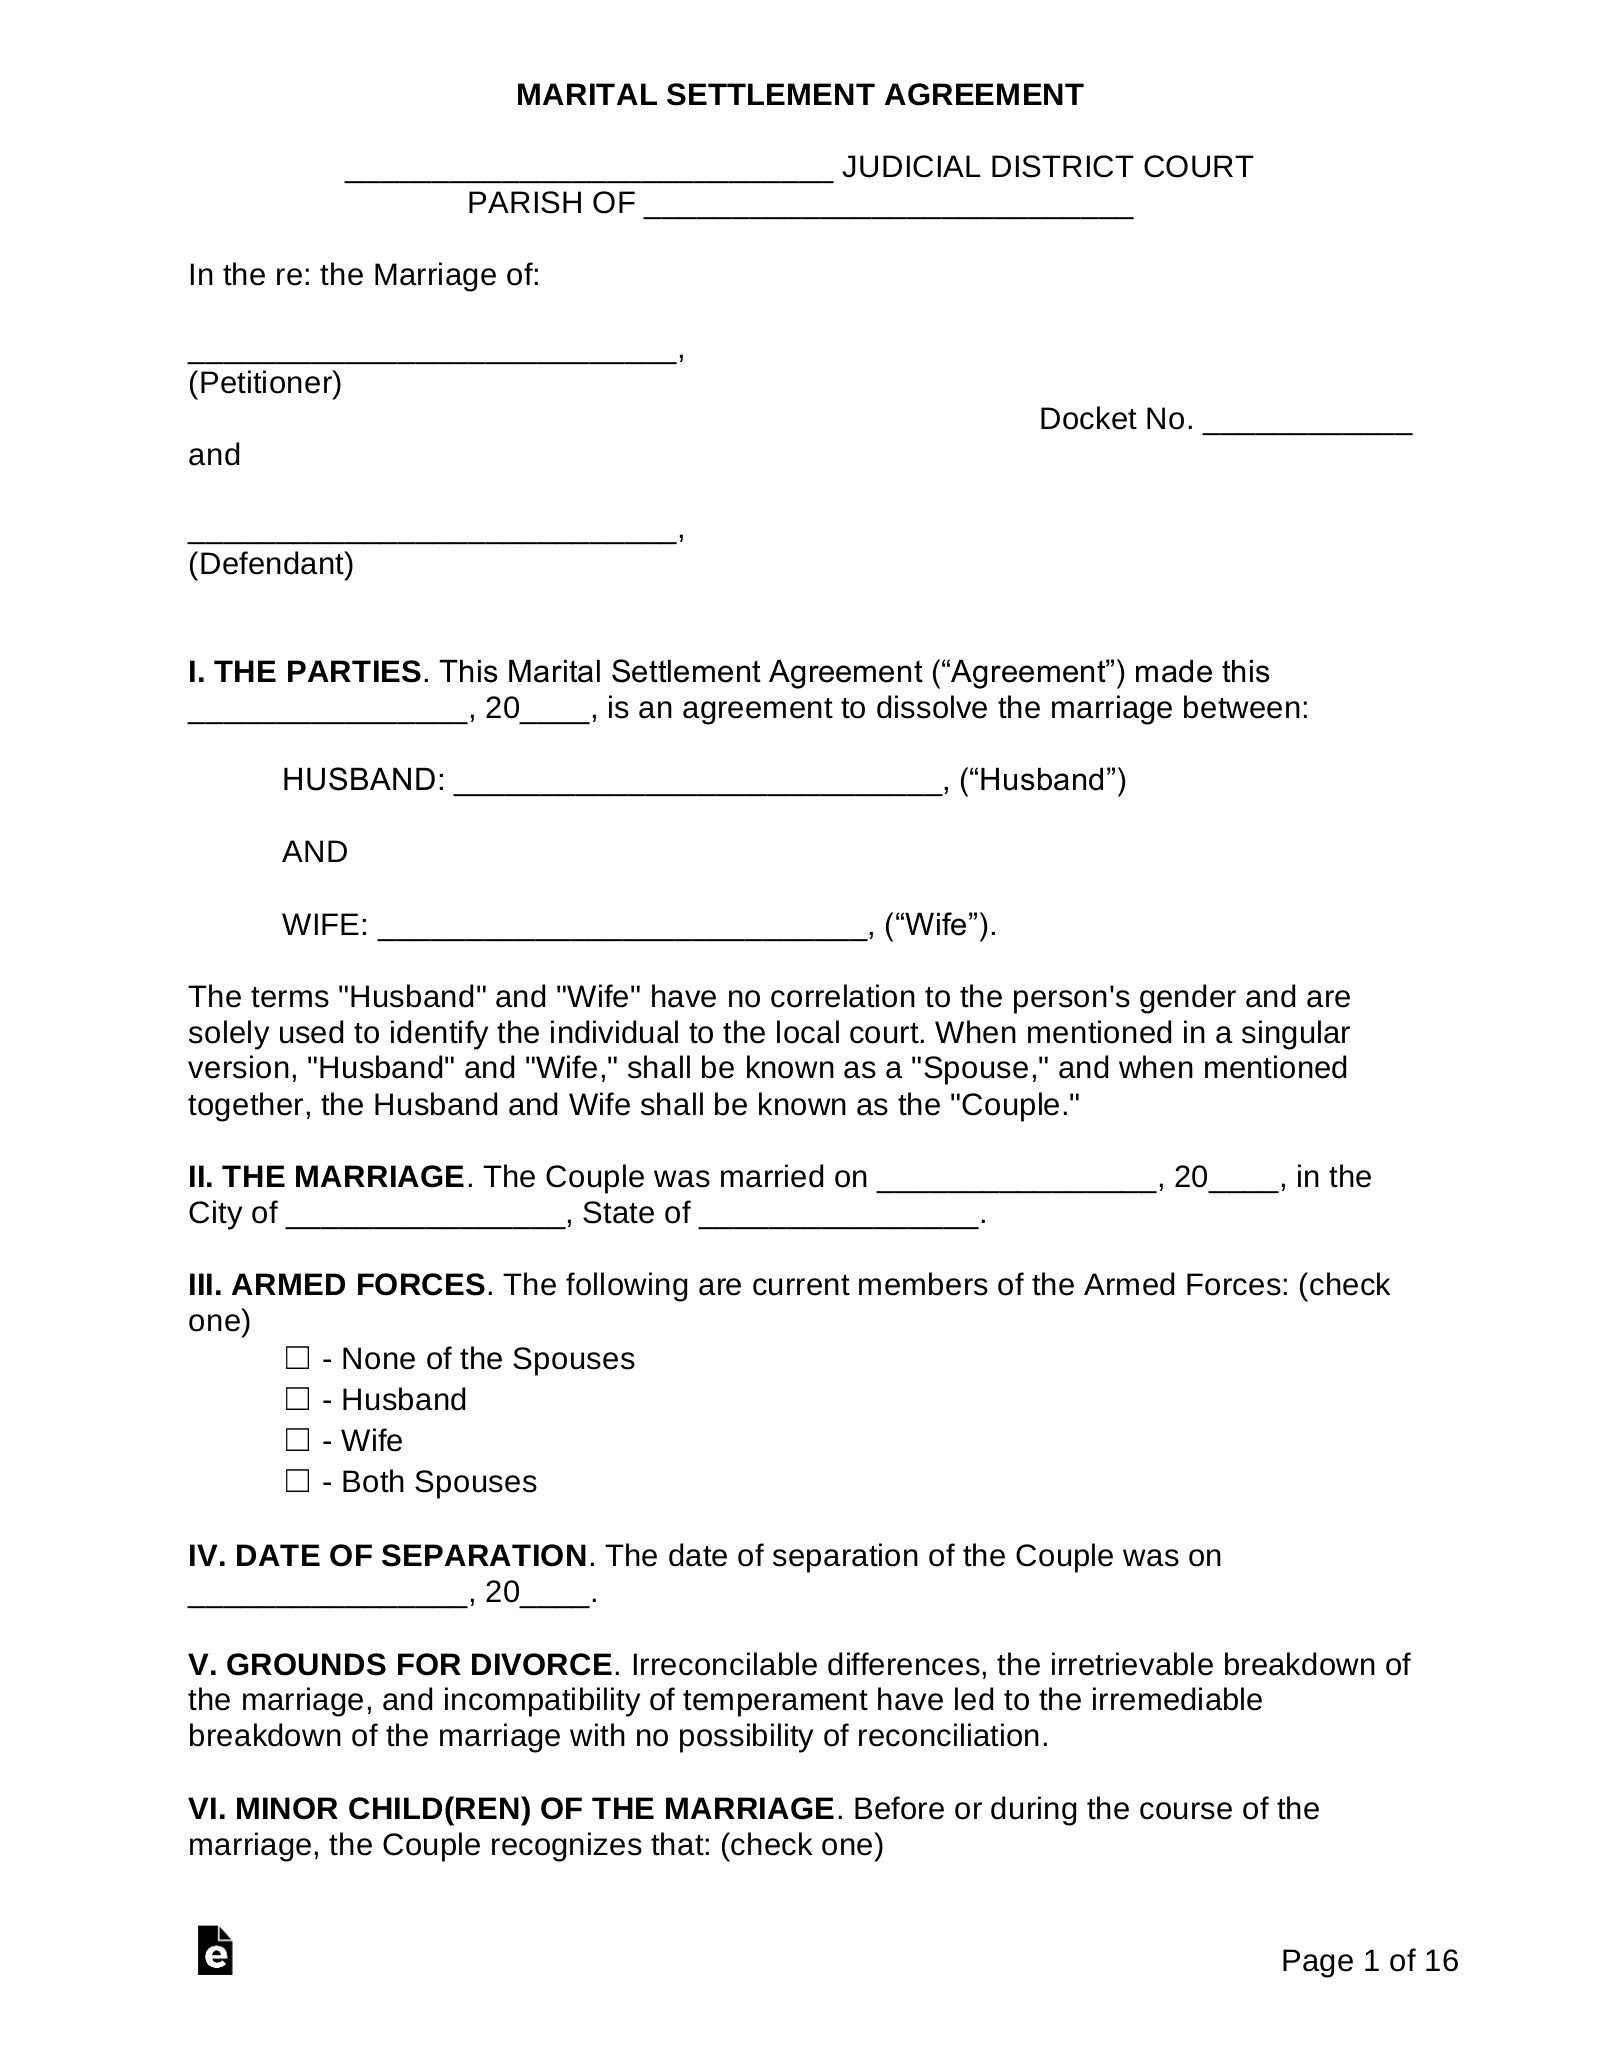 Louisiana Marital Settlement (Divorce) Agreement